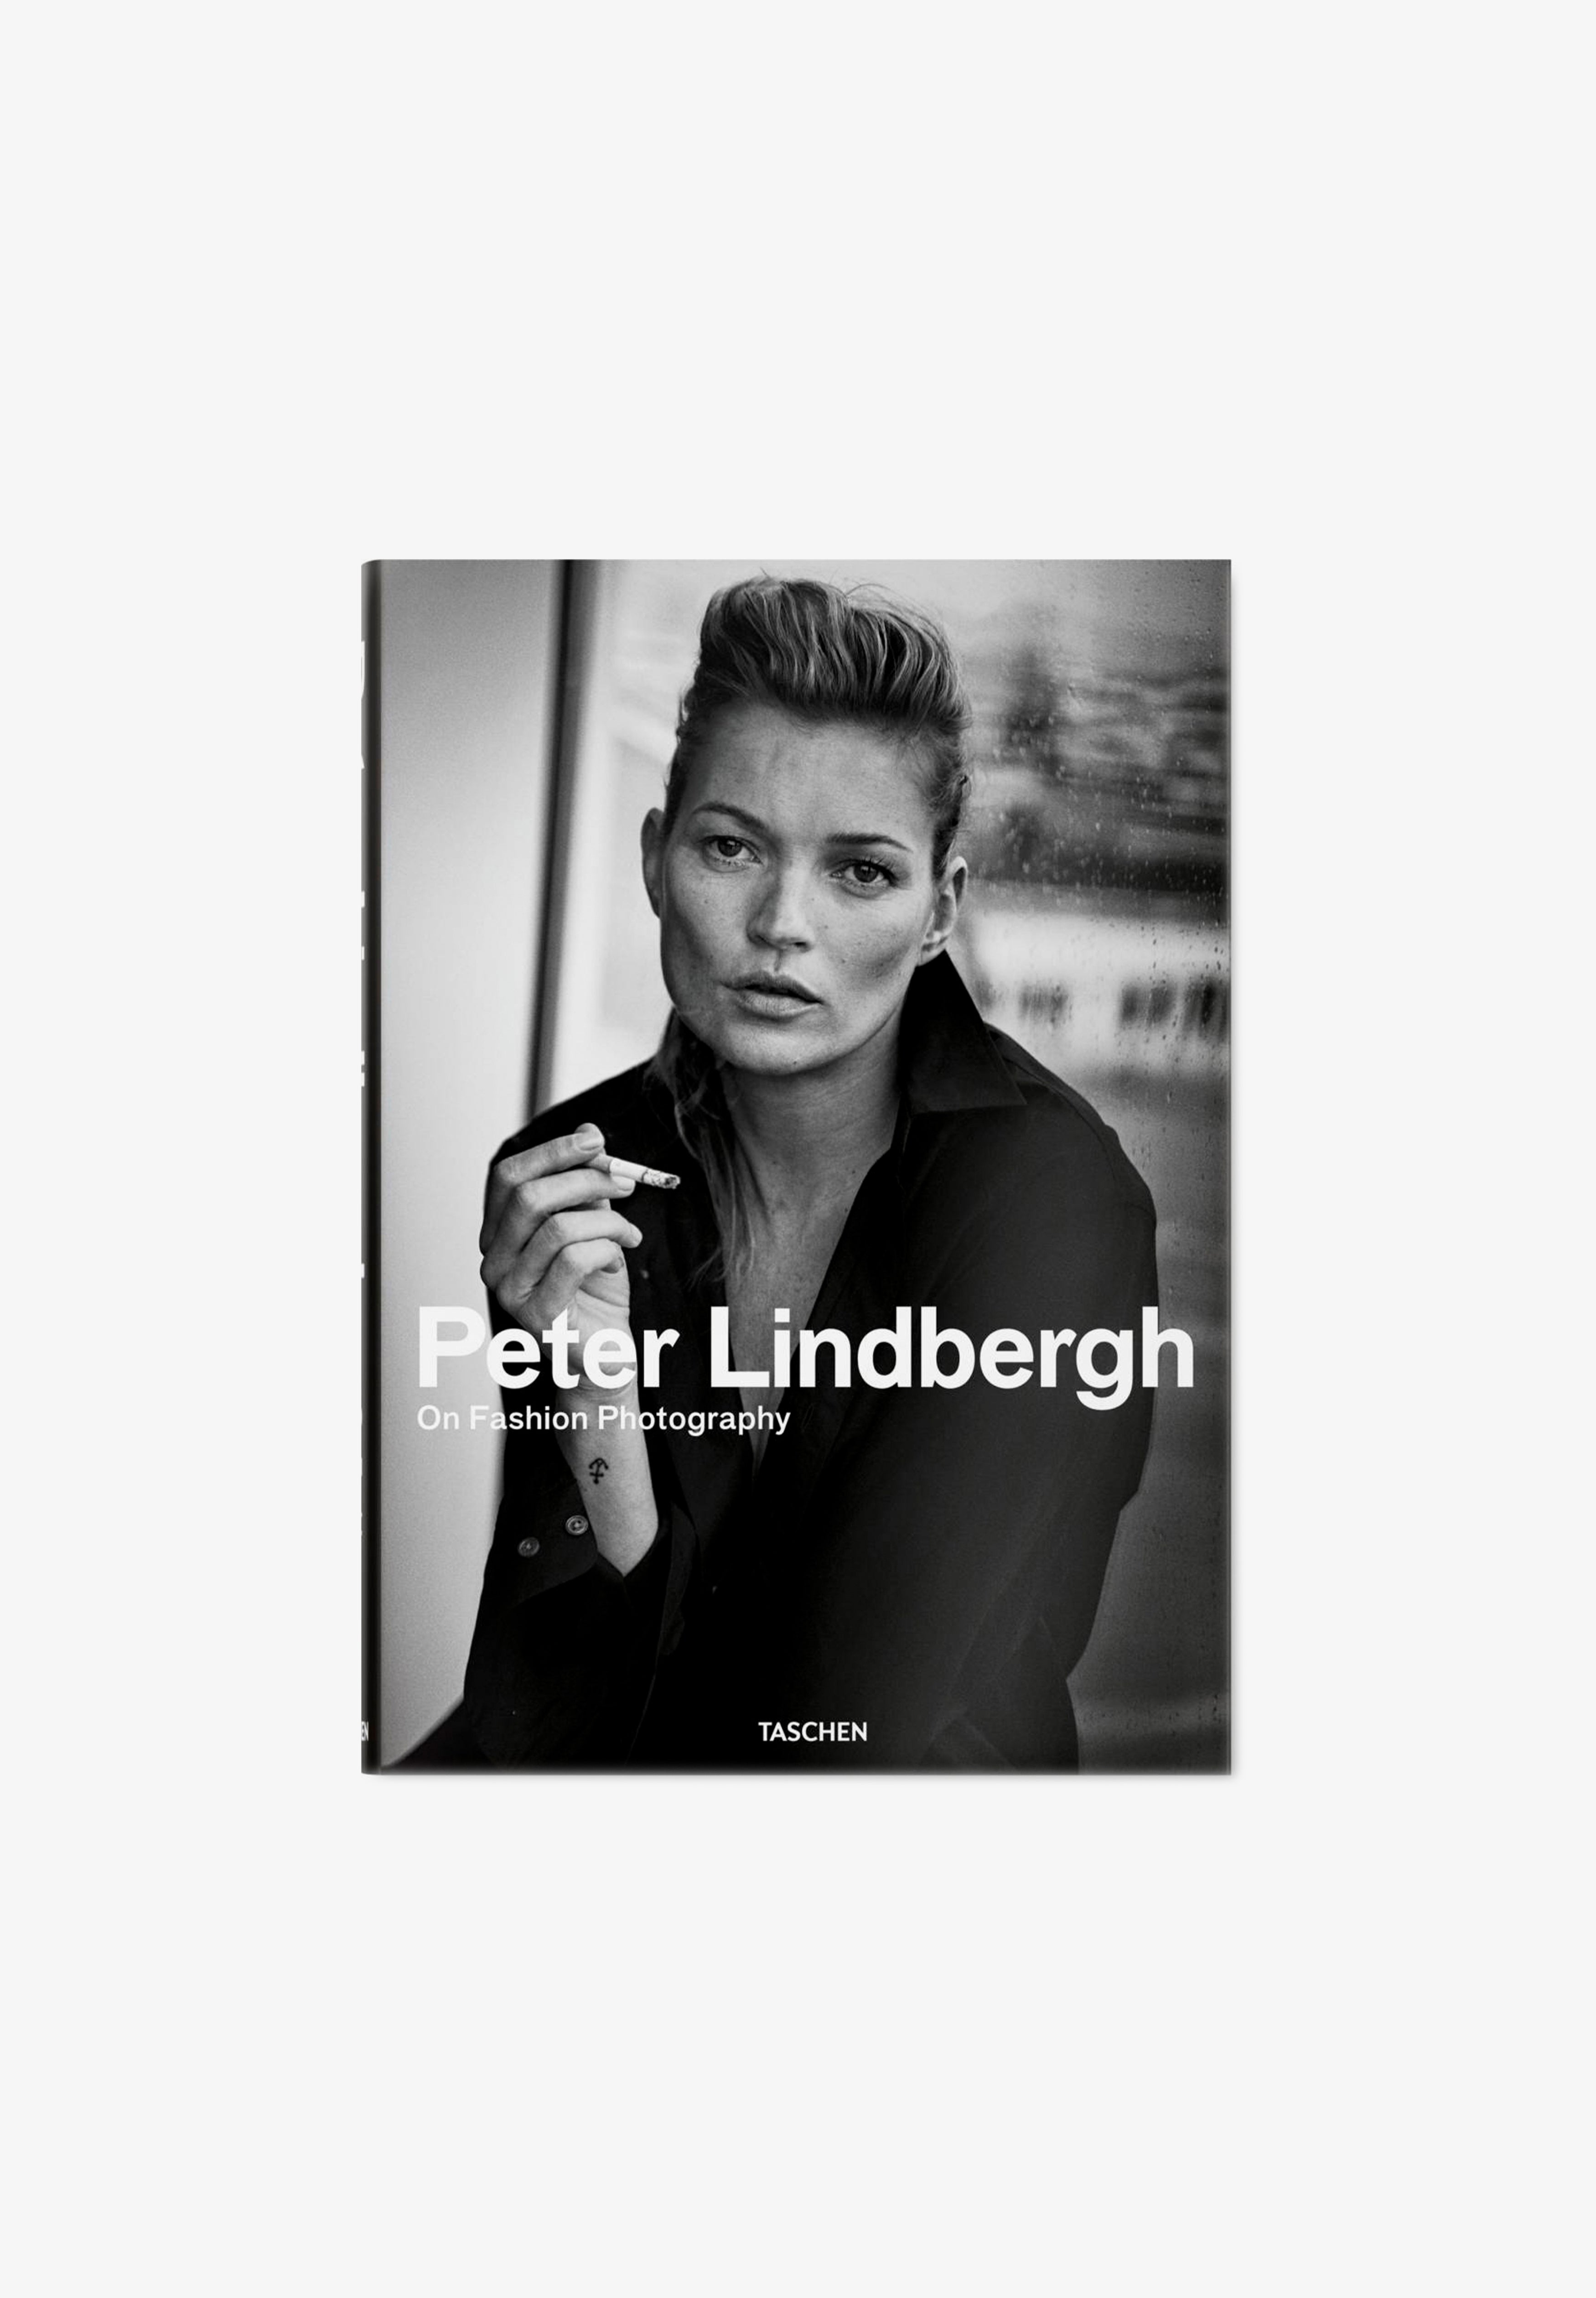 TASCHEN | LIVRO PETER LINDBERGH ON FASHION PHOTOGRAPHY